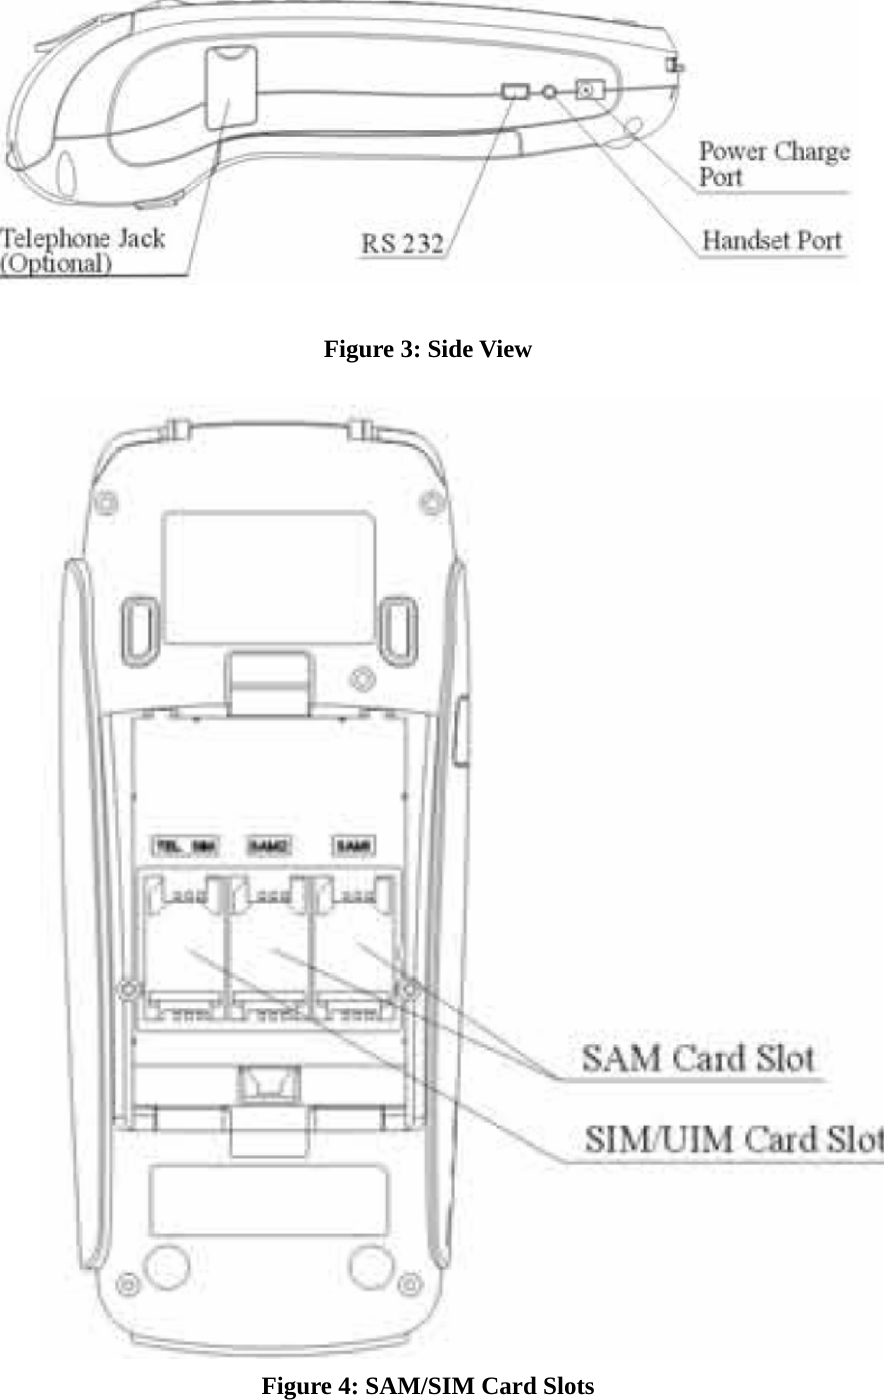   Figure 3: Side View   Figure 4: SAM/SIM Card Slots 